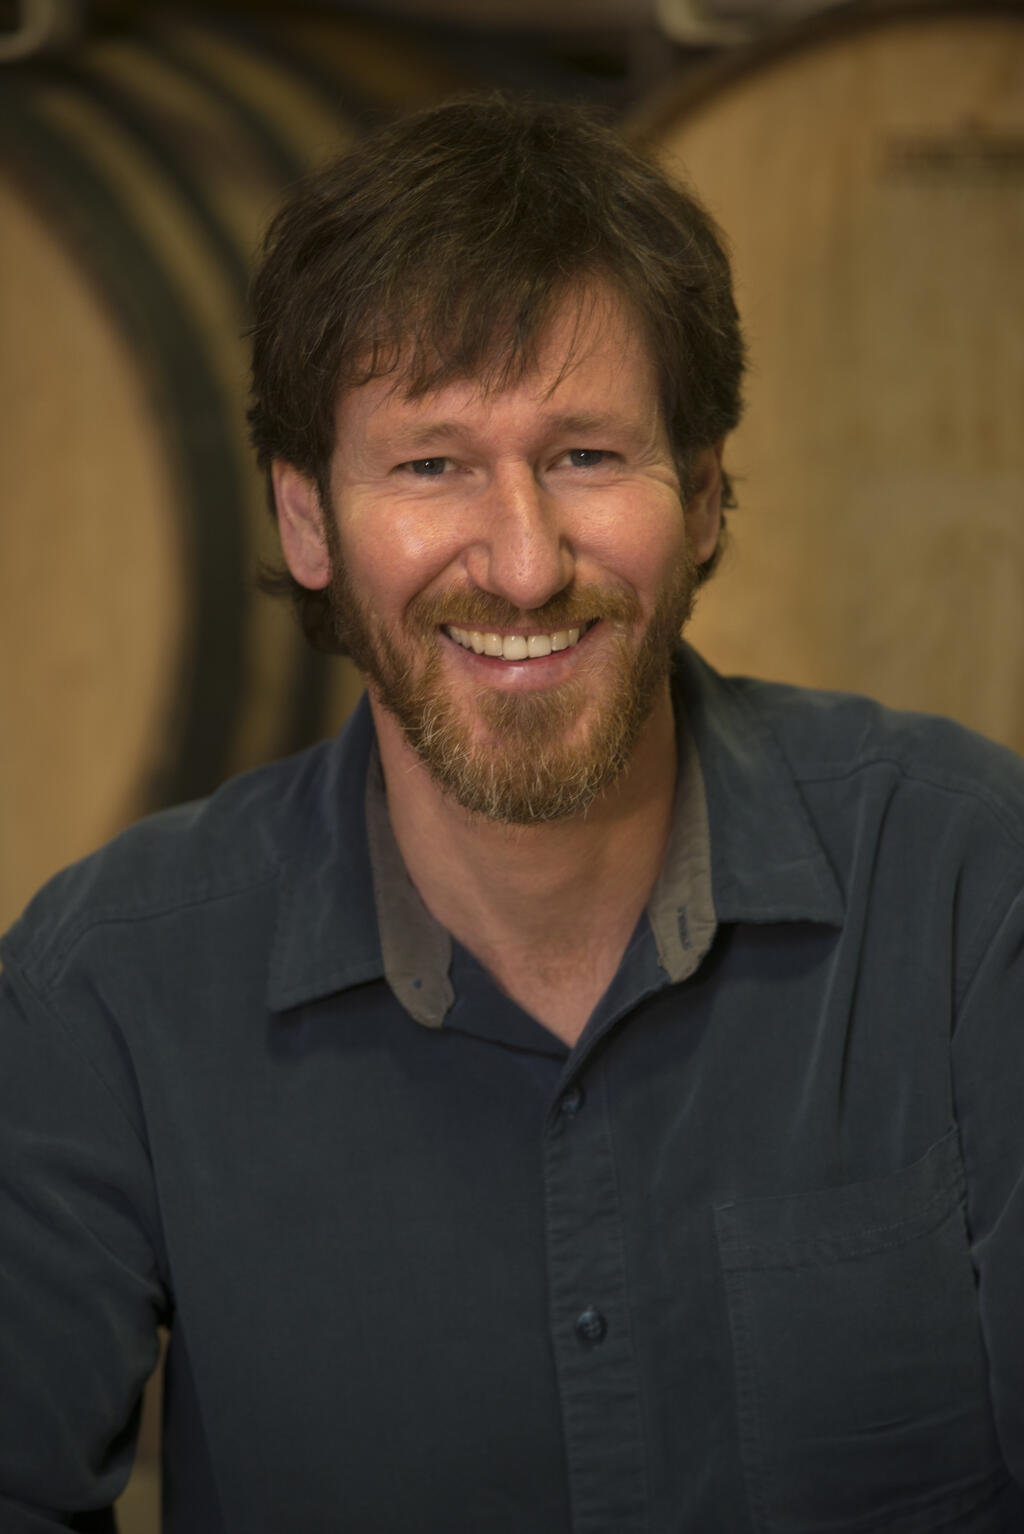 Winemaker Greg Morthole crafted the Davis Bynum sauvignon blanc wine of the week winner (Rodney Strong Vineyards)